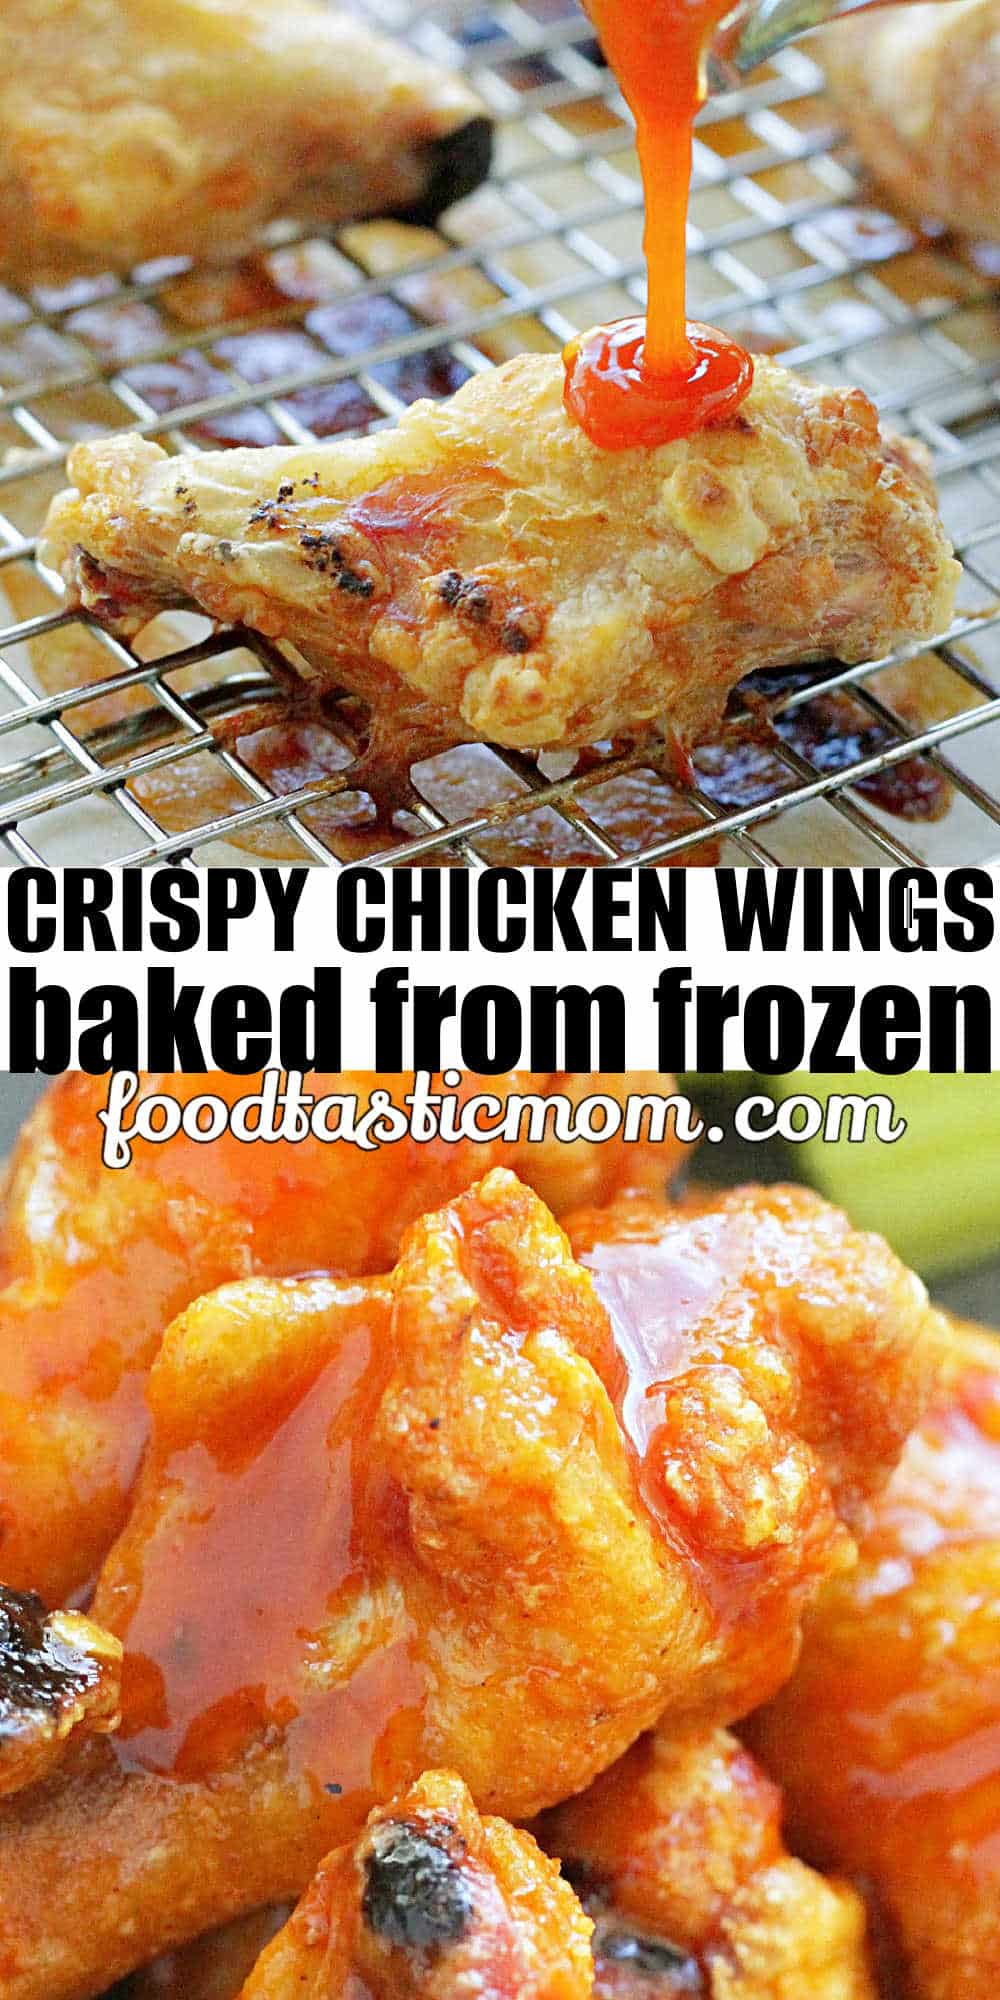 Crispy Baked Chicken Wings | Foodtastic Mom #chickenwings #buffalowings via @foodtasticmom